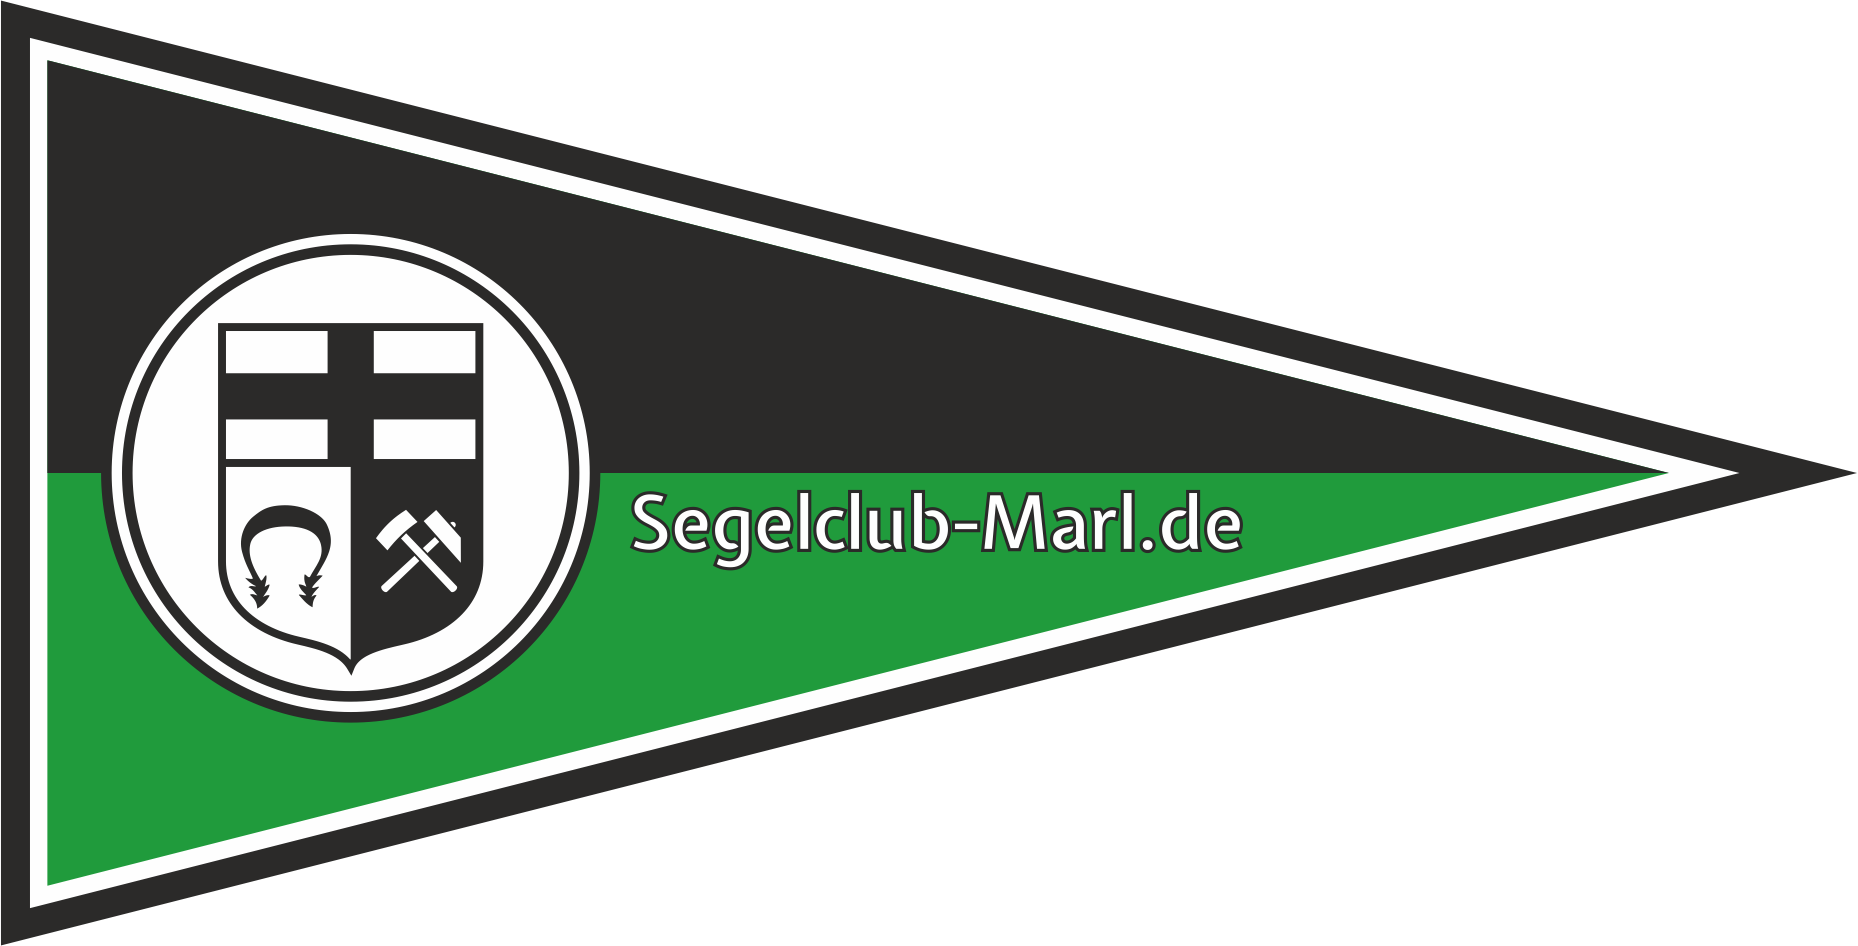 SegelclubMarl_Wimpel-Datei-2_06122021